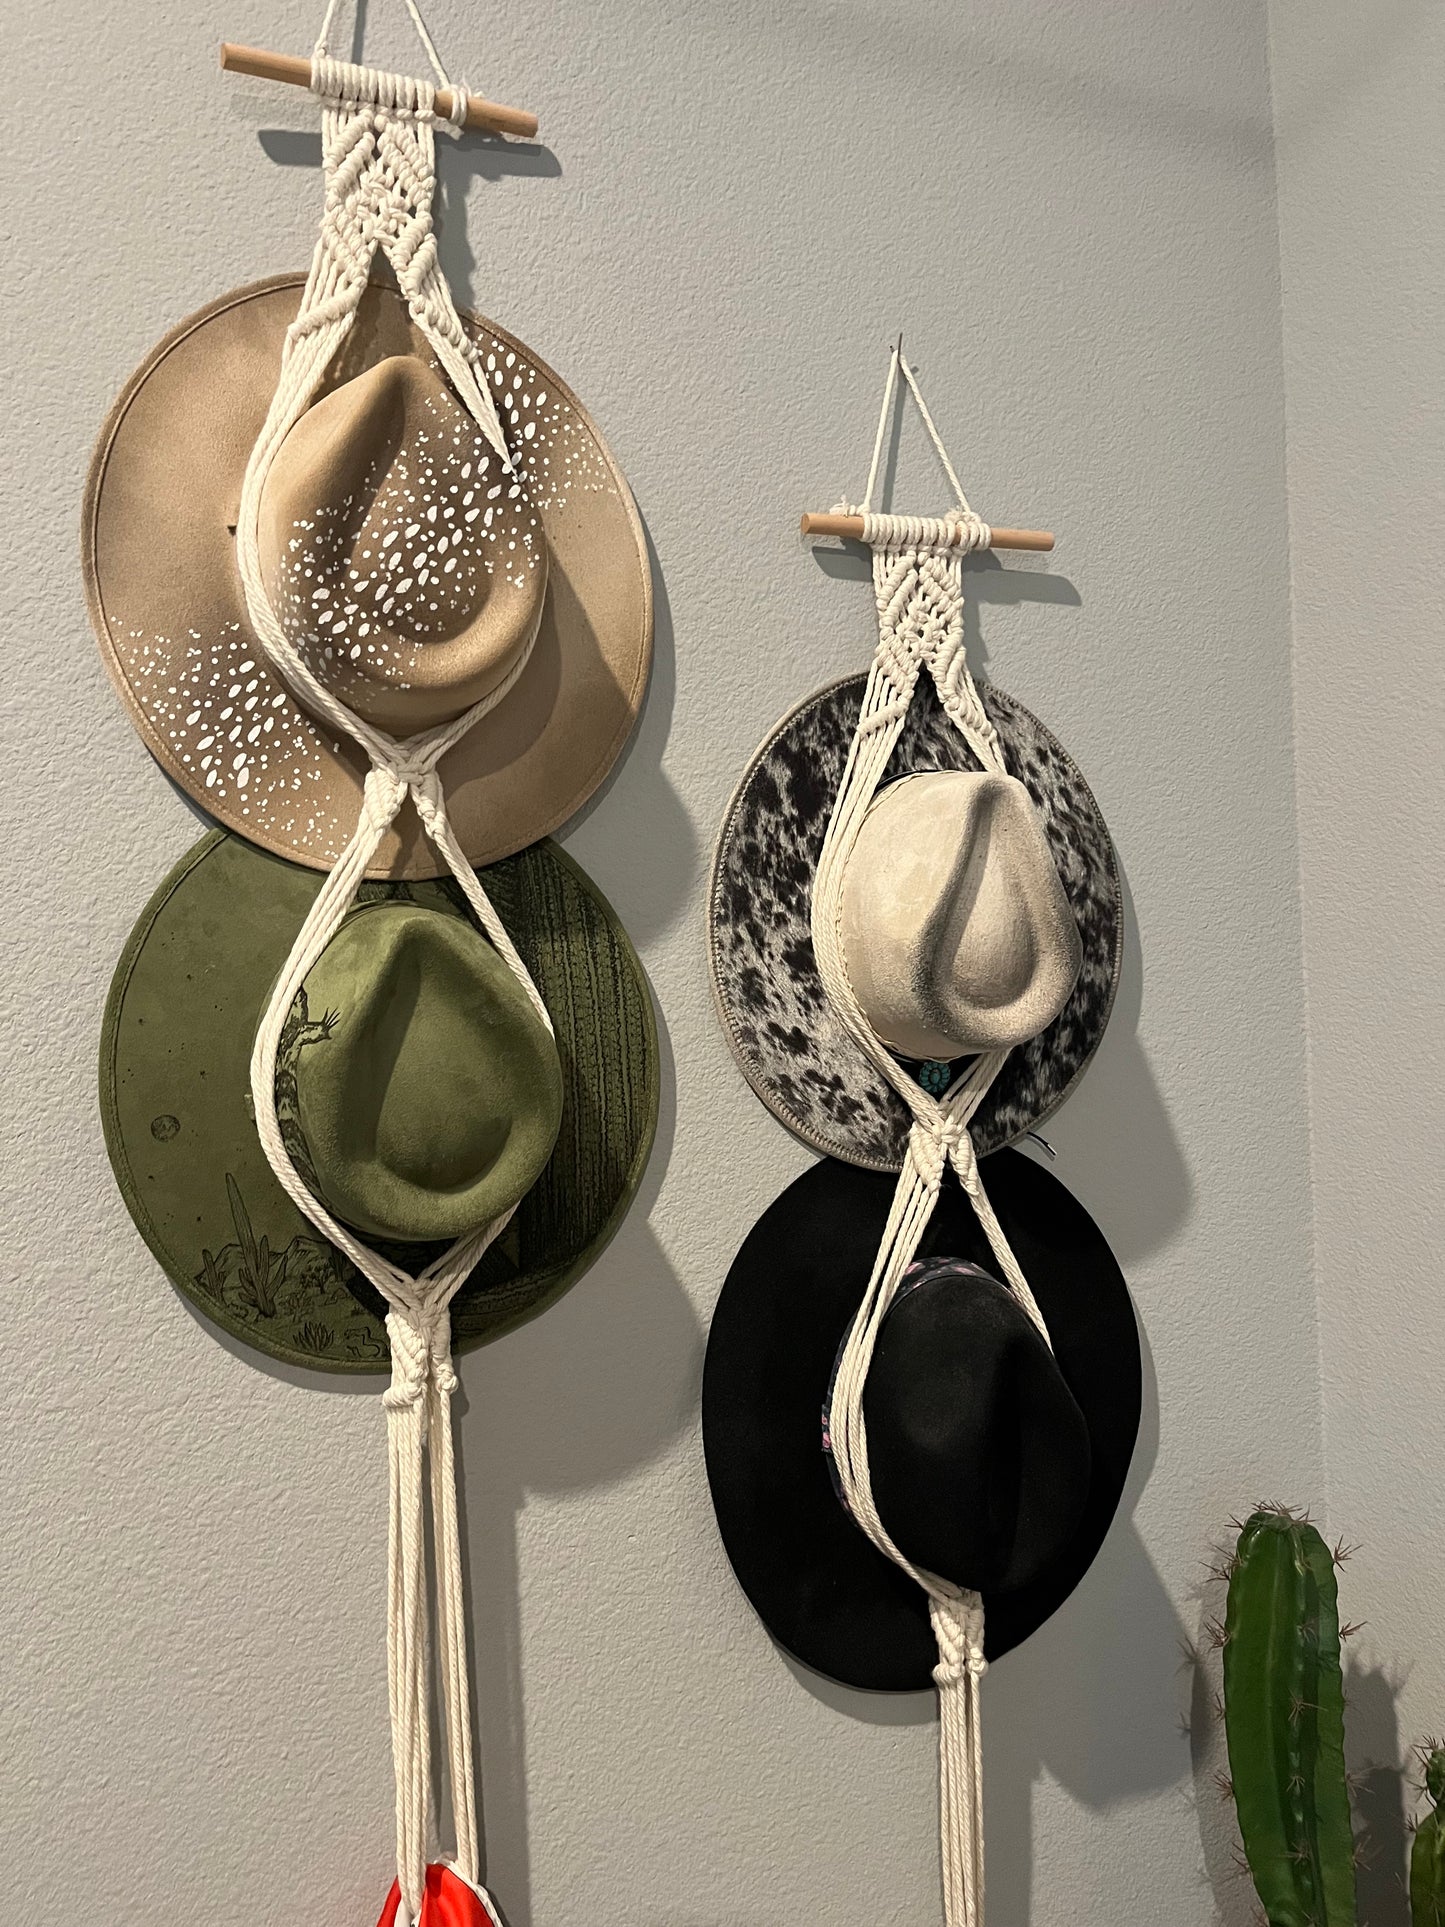 Macrame 3 hat hanger for wall